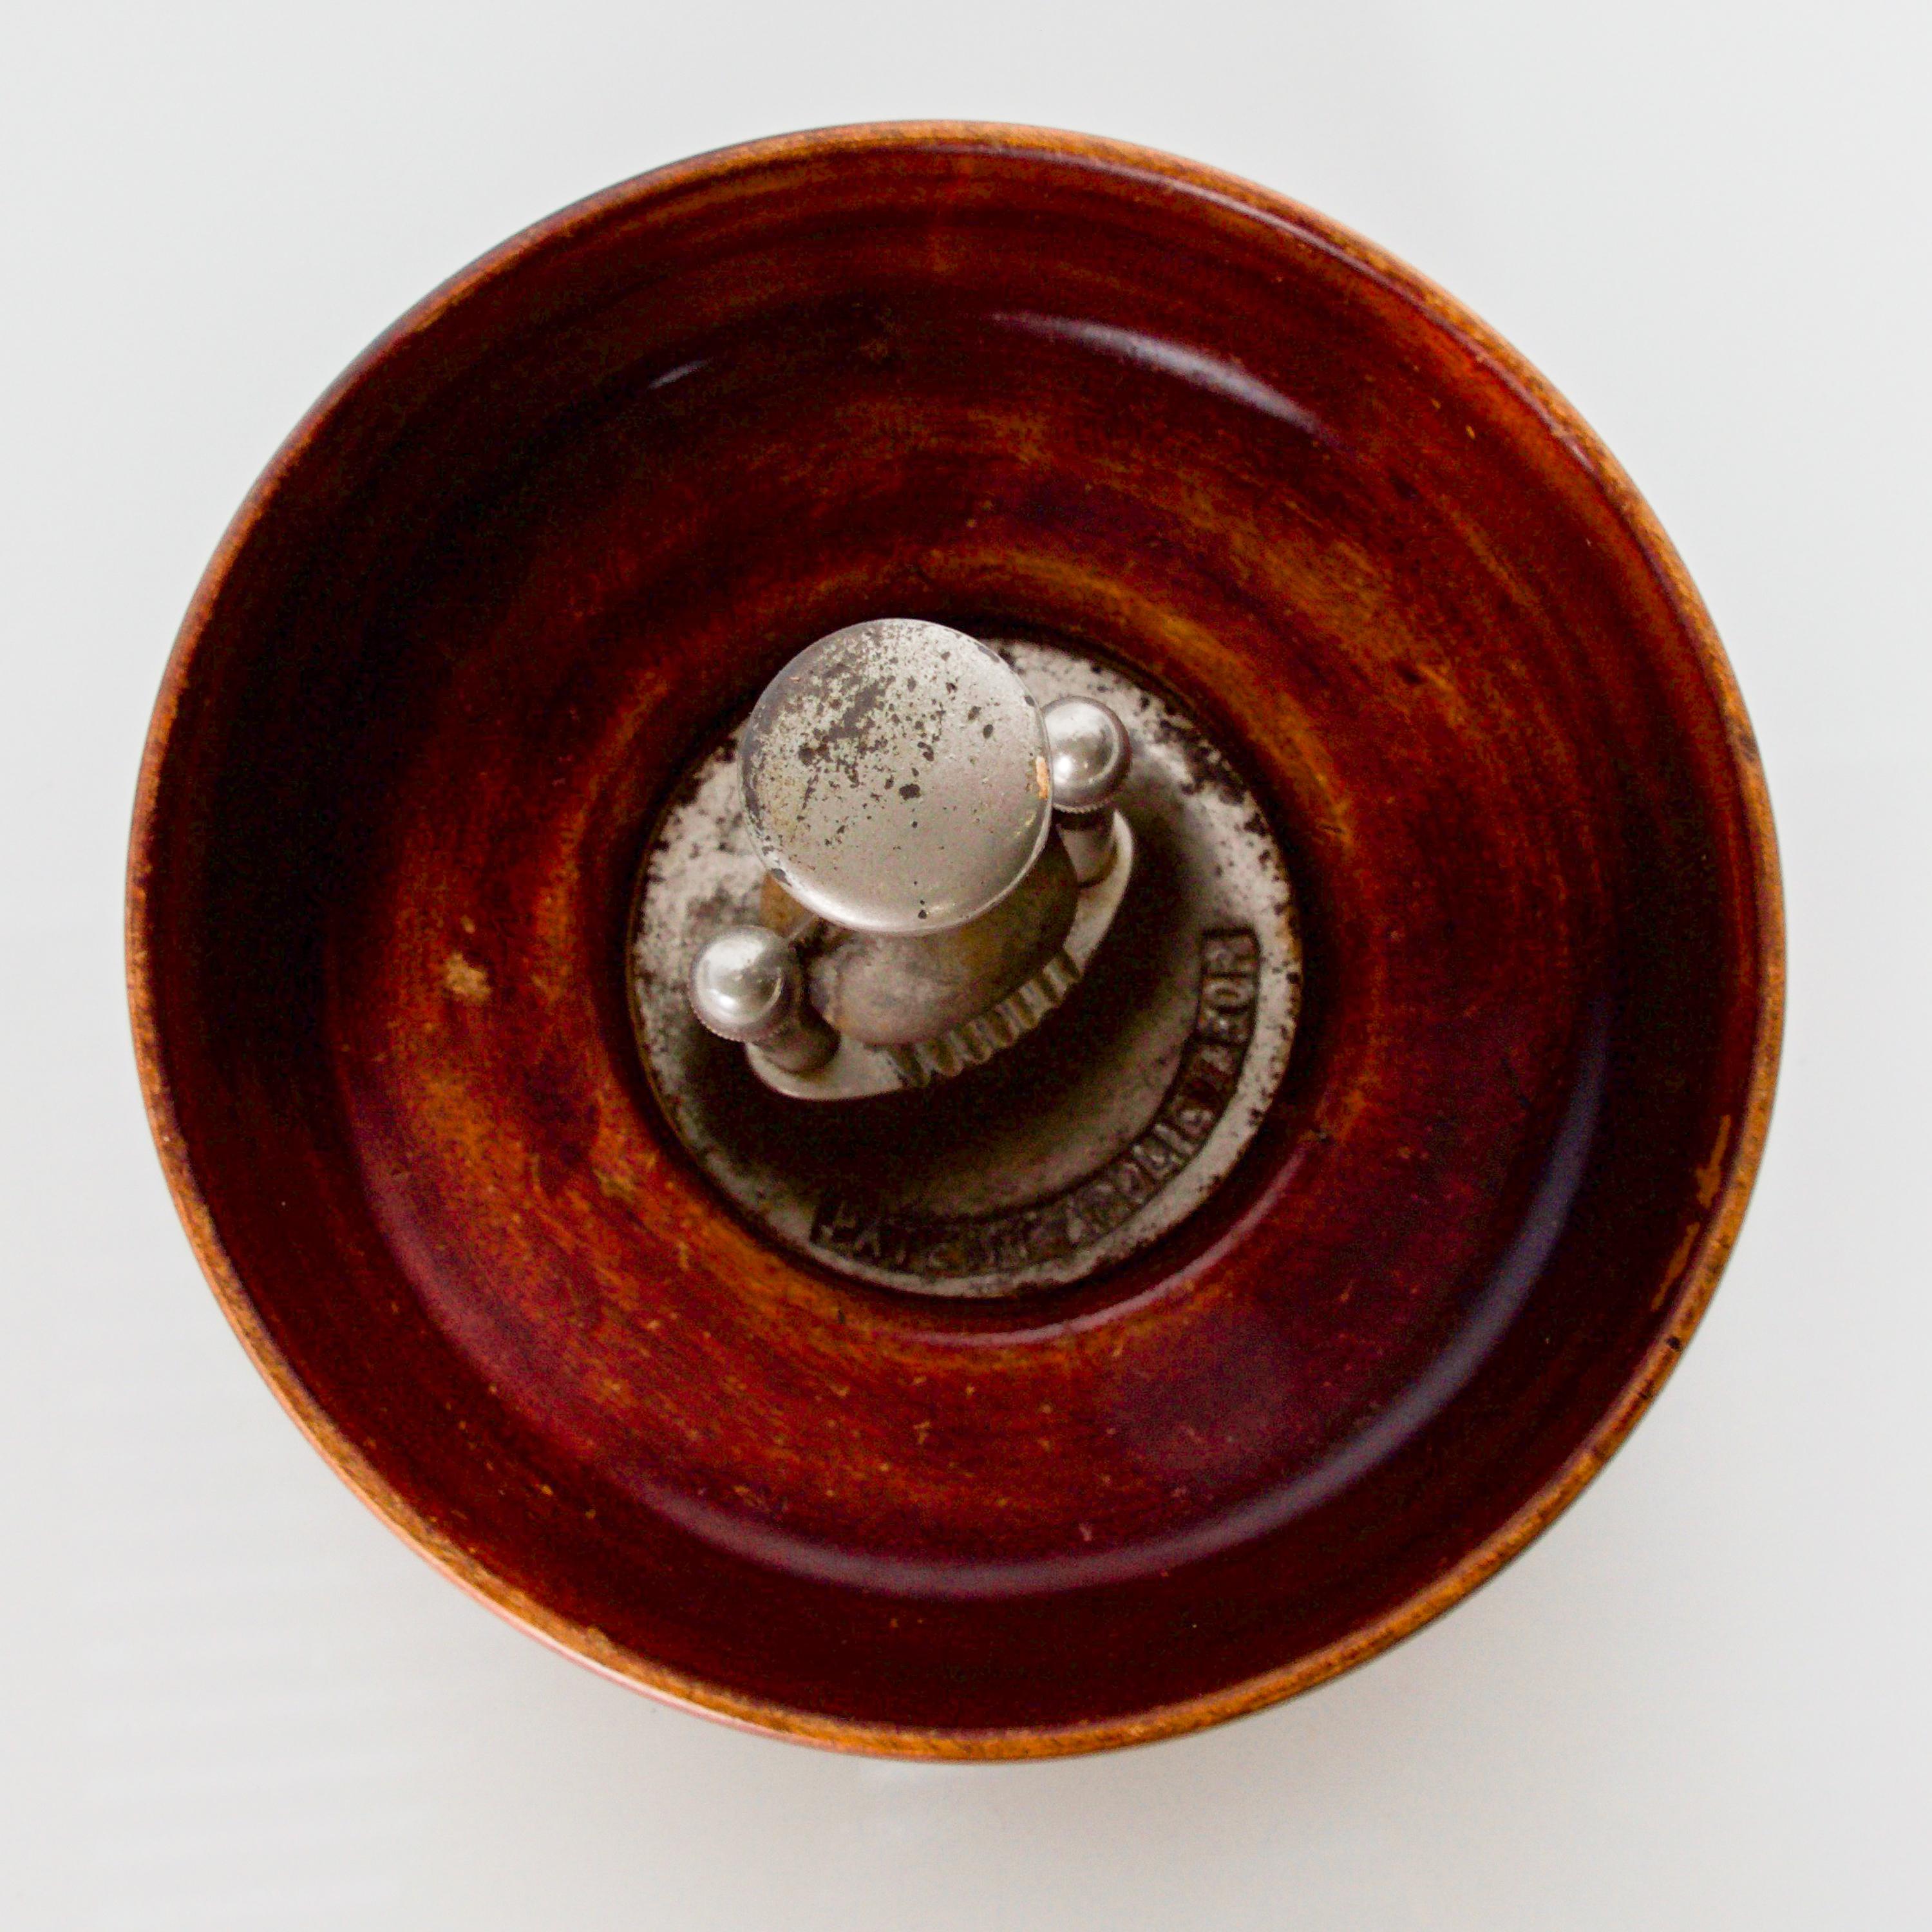 American 1960s Modernist Patent Design Elegant Wood Nut Bowl with Built in Nutcracker USA